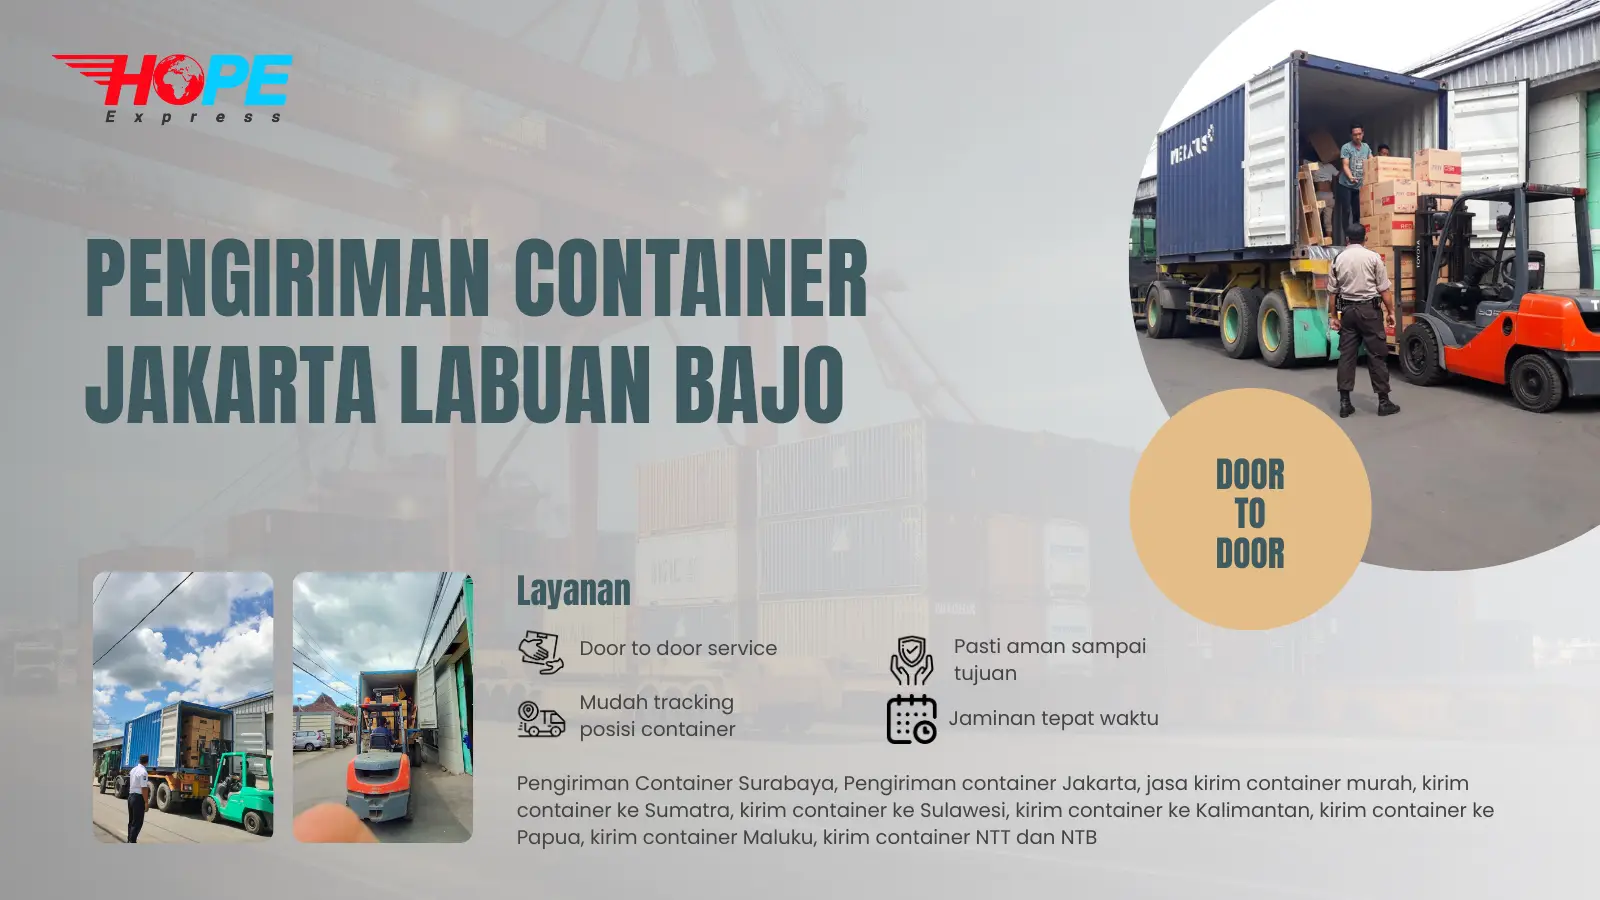 Pengiriman Container Jakarta Labuan Bajo